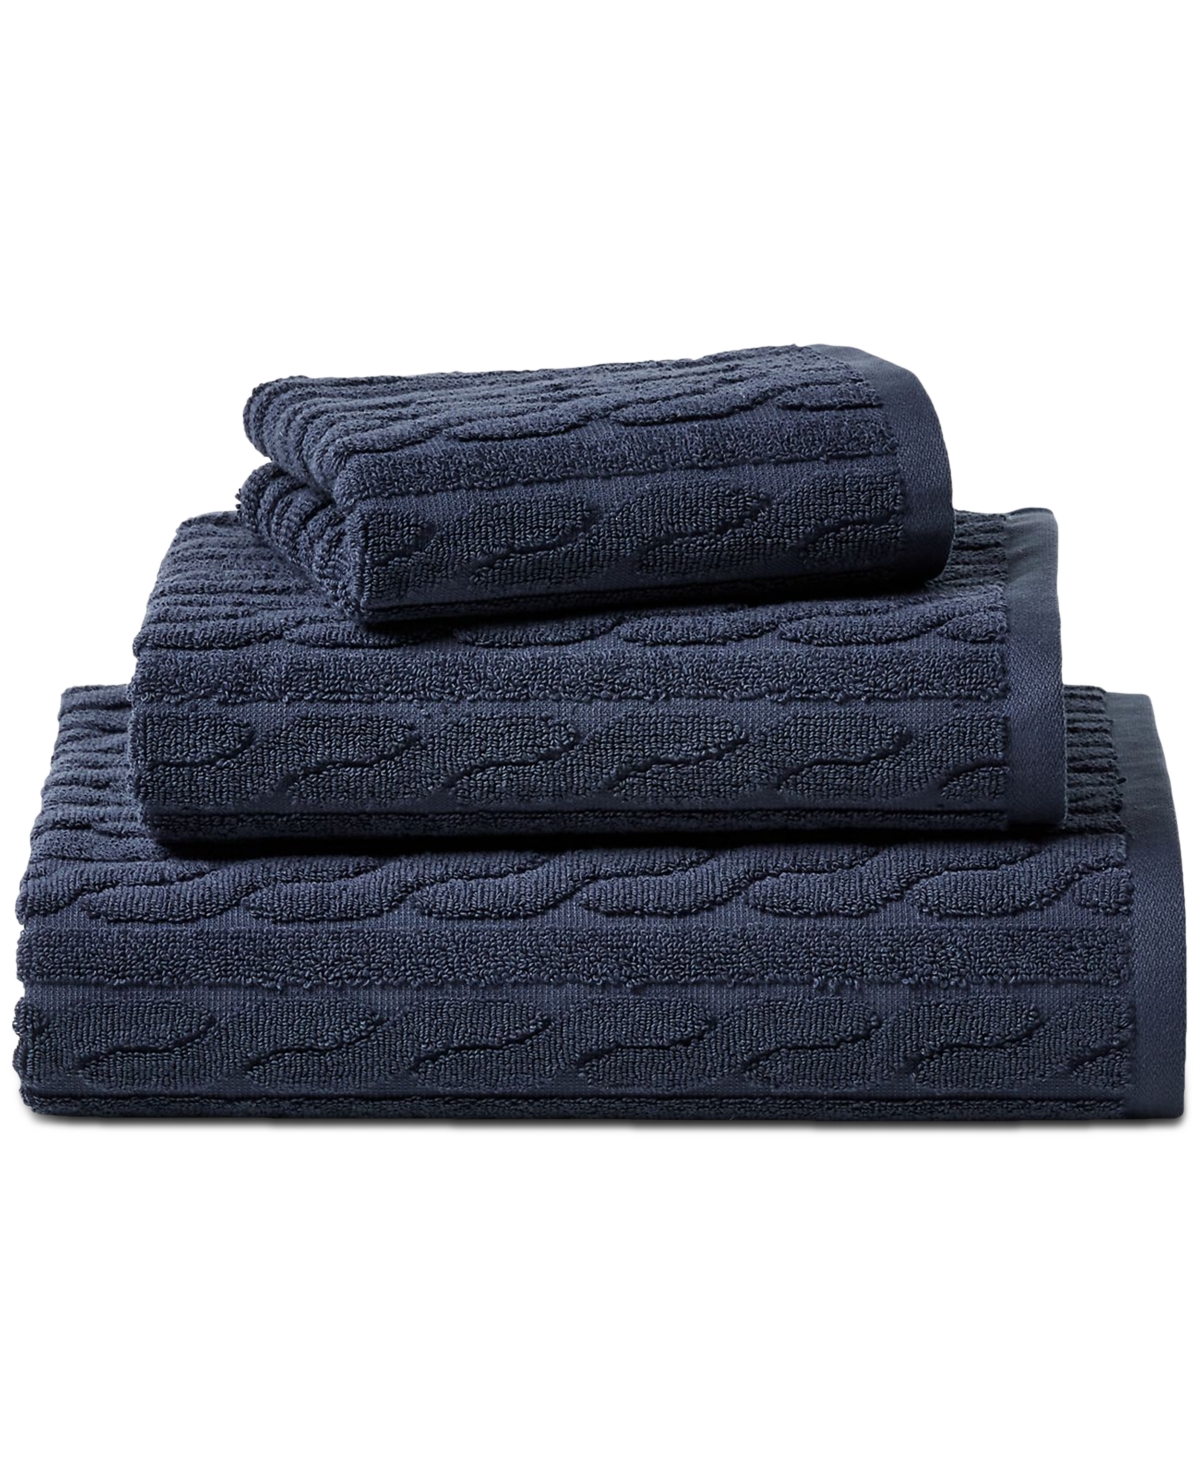  Ralph Lauren Sanders Towel 6 Piece Set Club Navy - 2 Bath Towels,  2 Hand Towels, 2 Washcloths : Home & Kitchen